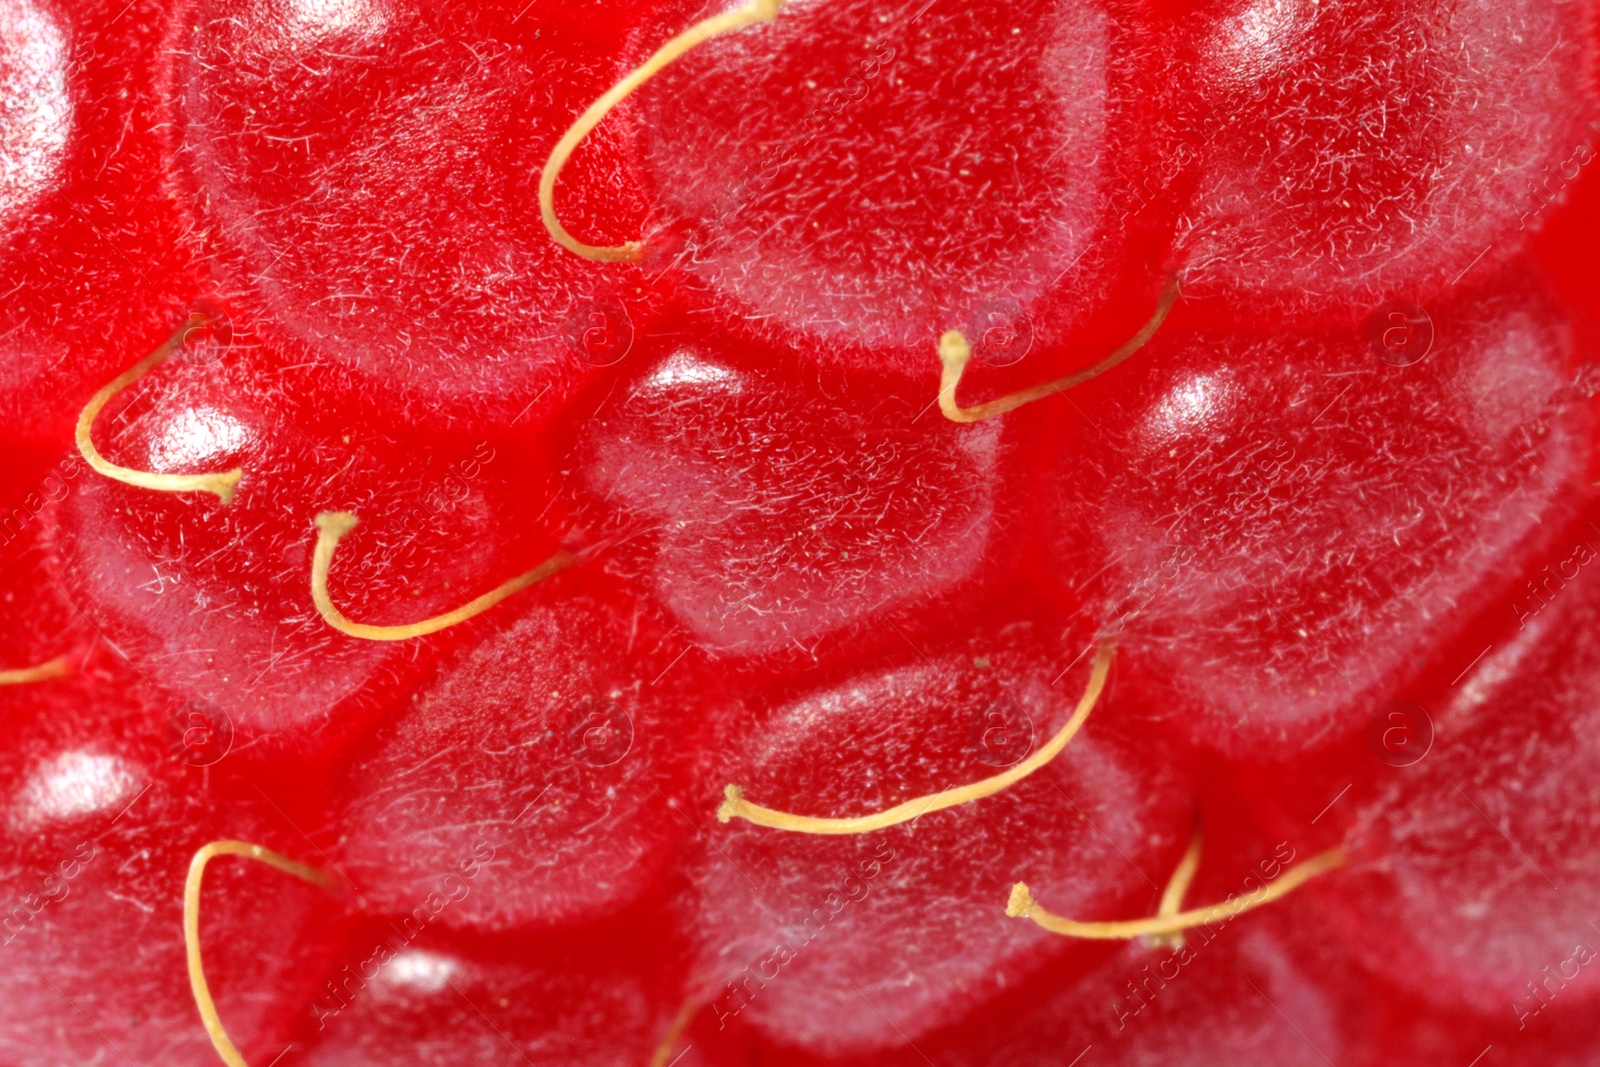 Photo of Texture of ripe raspberry as background, macro view. Fresh berry